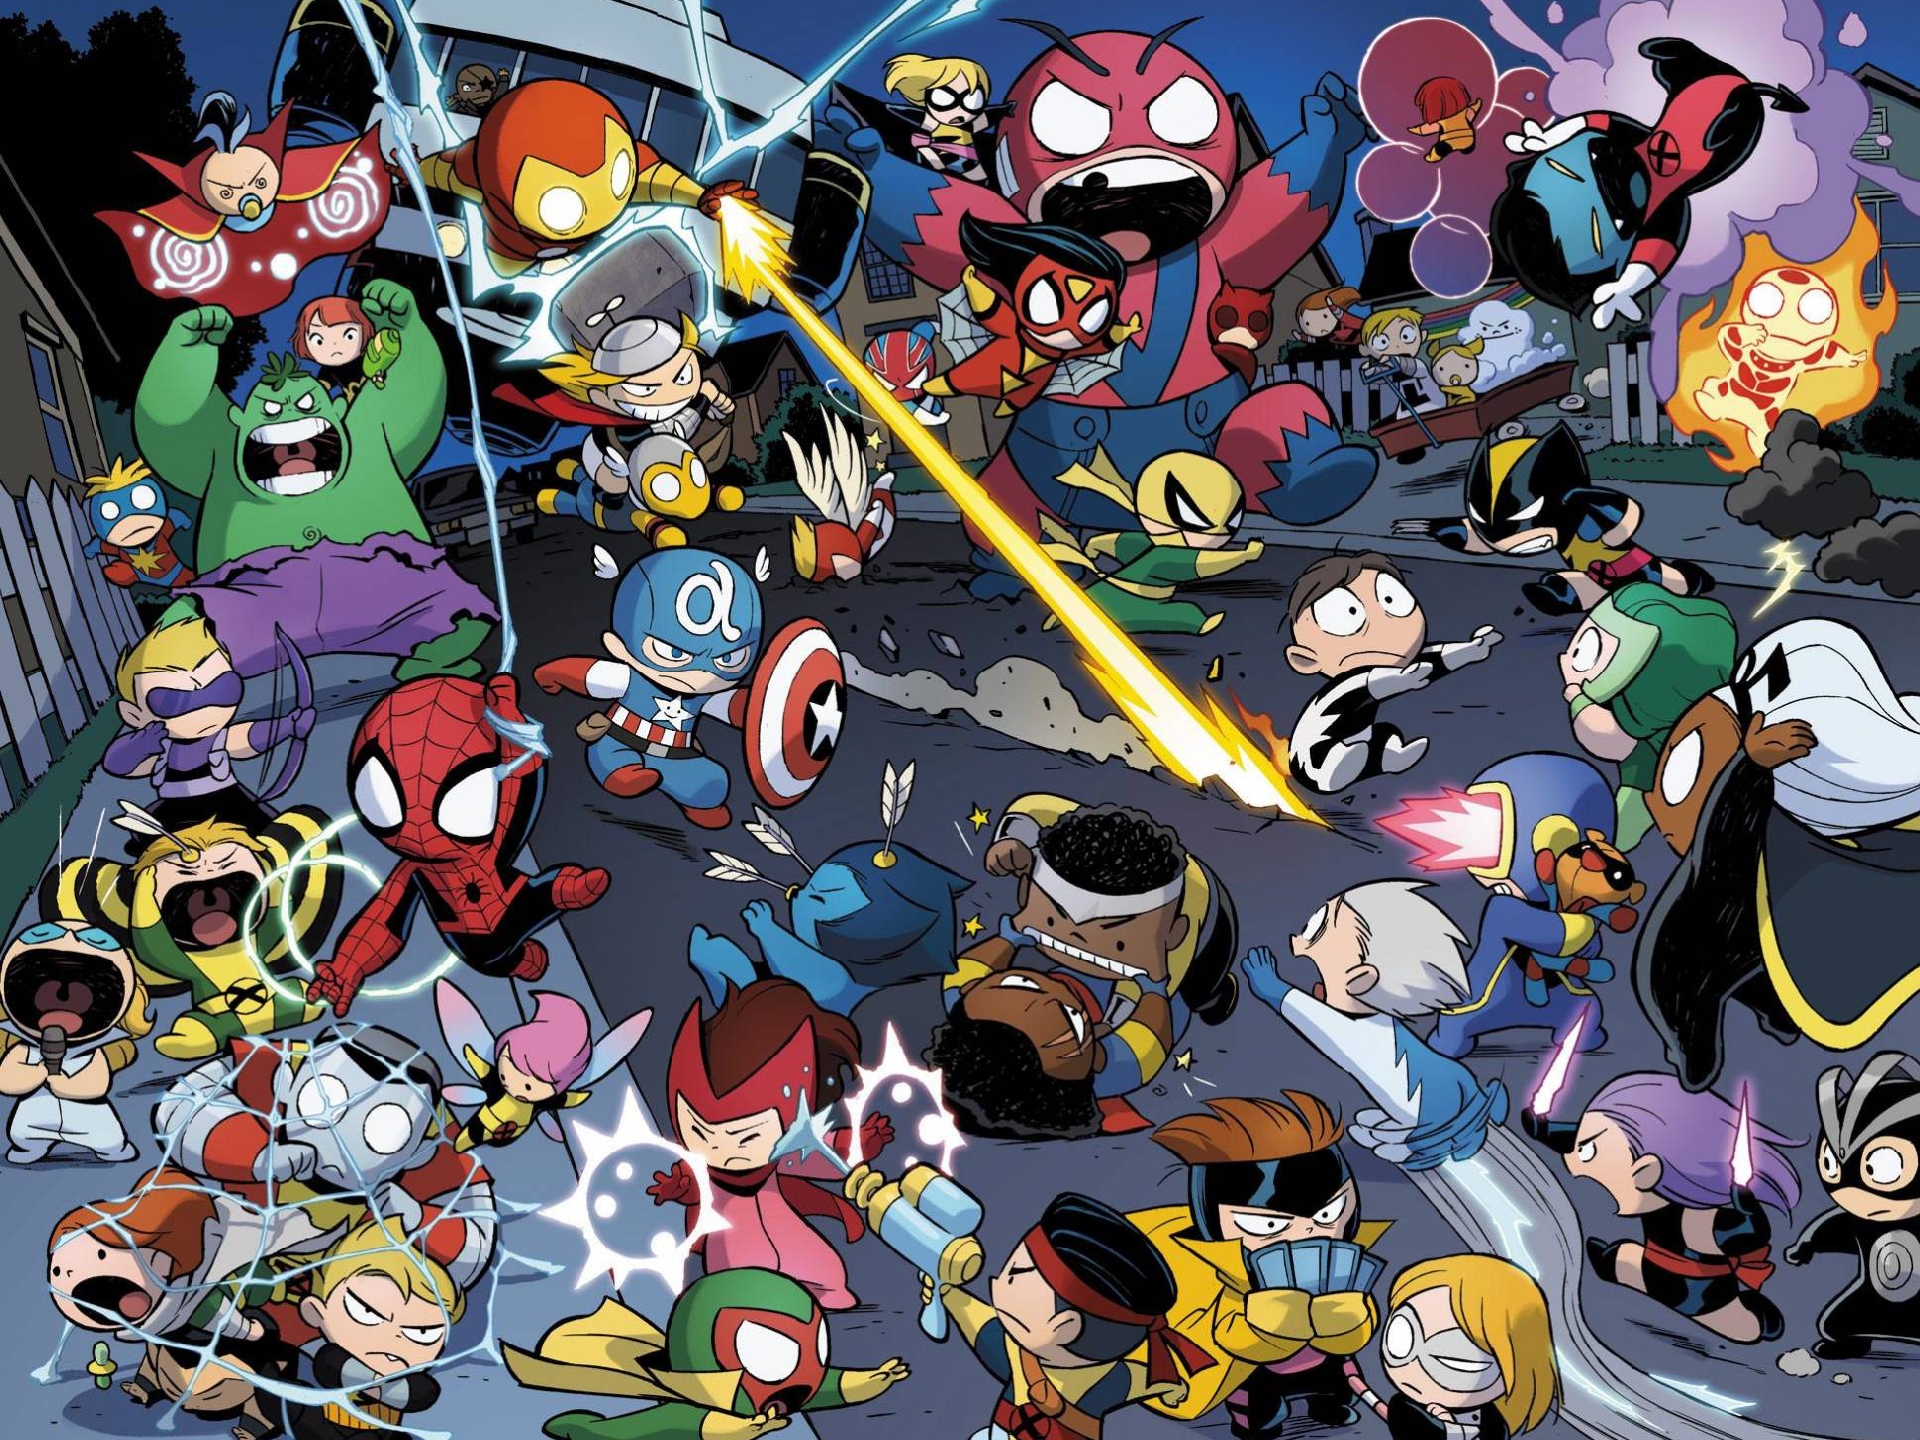 hulk, vision (marvel comics), colossus, quicksilver (marvel comics), comics, avengers vs x men babies, angel (marvel comics), avengers, banshee (marvel comics), beast (marvel comics), bishop (marvel comics), black widow, captain america, carol danvers, cyclops (marvel comics), dazzler (marvel comics), gambit (marvel comics), giant man, havok (marvel comics), hawkeye, hope summers, human torch (marvel comics), iron fist (marvel comics), iron man, longshot (marvel comics), luke cage, ms marvel, namor the sub mariner, nick fury, nightcrawler (marvel comics), pixie (marvel comics), polaris (marvel comics), power pack, psylocke (marvel comics), scarlet witch, spider man, spider woman, storm (marvel comics), wasp (marvel comics), wolverine, x men Full HD